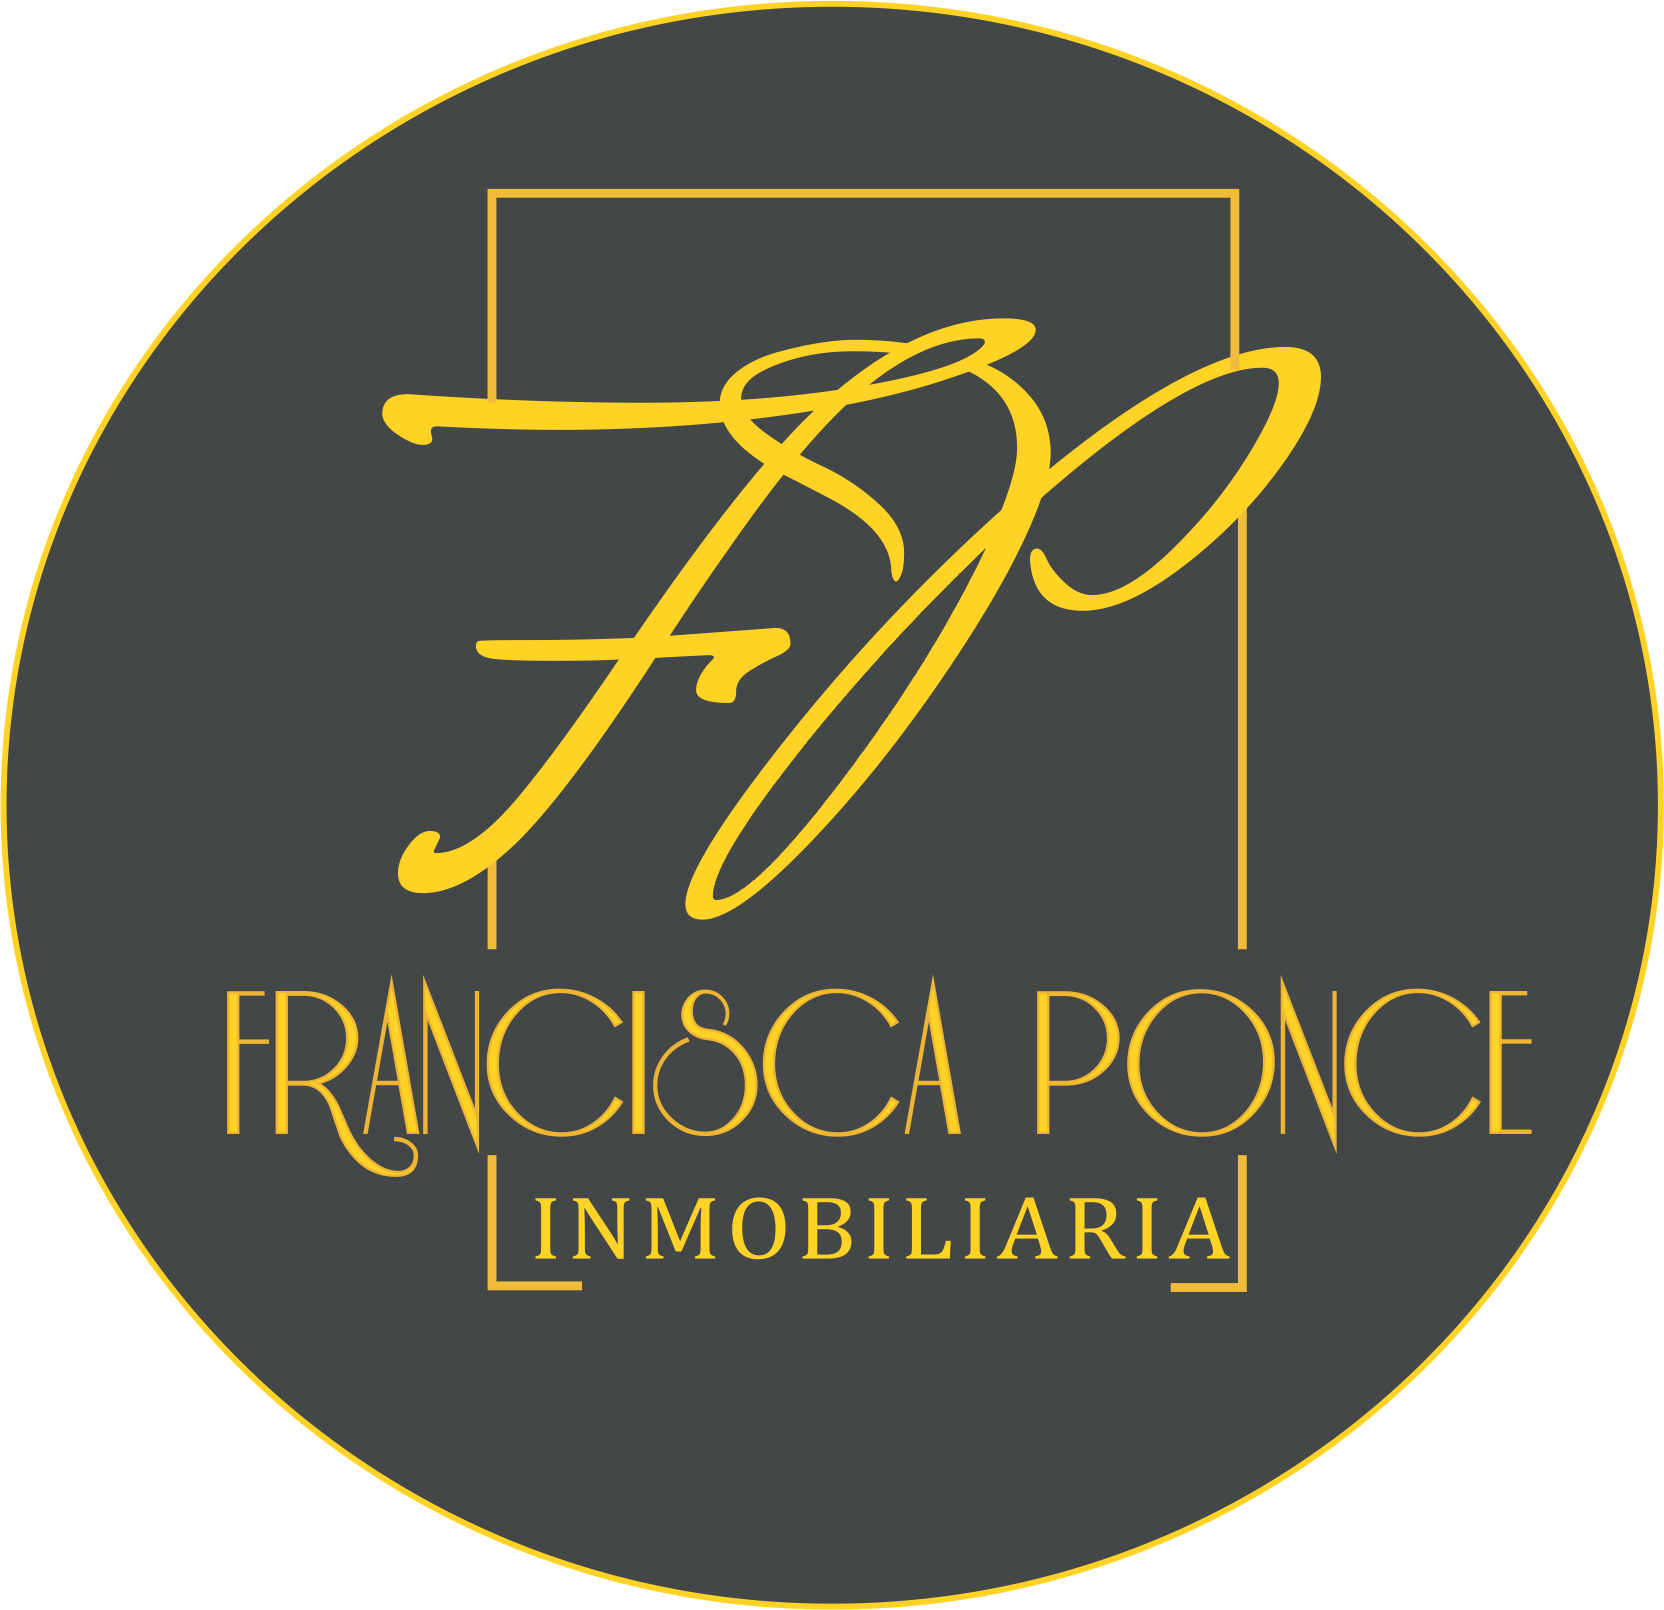 Francisca Ponce Inmobiliaria